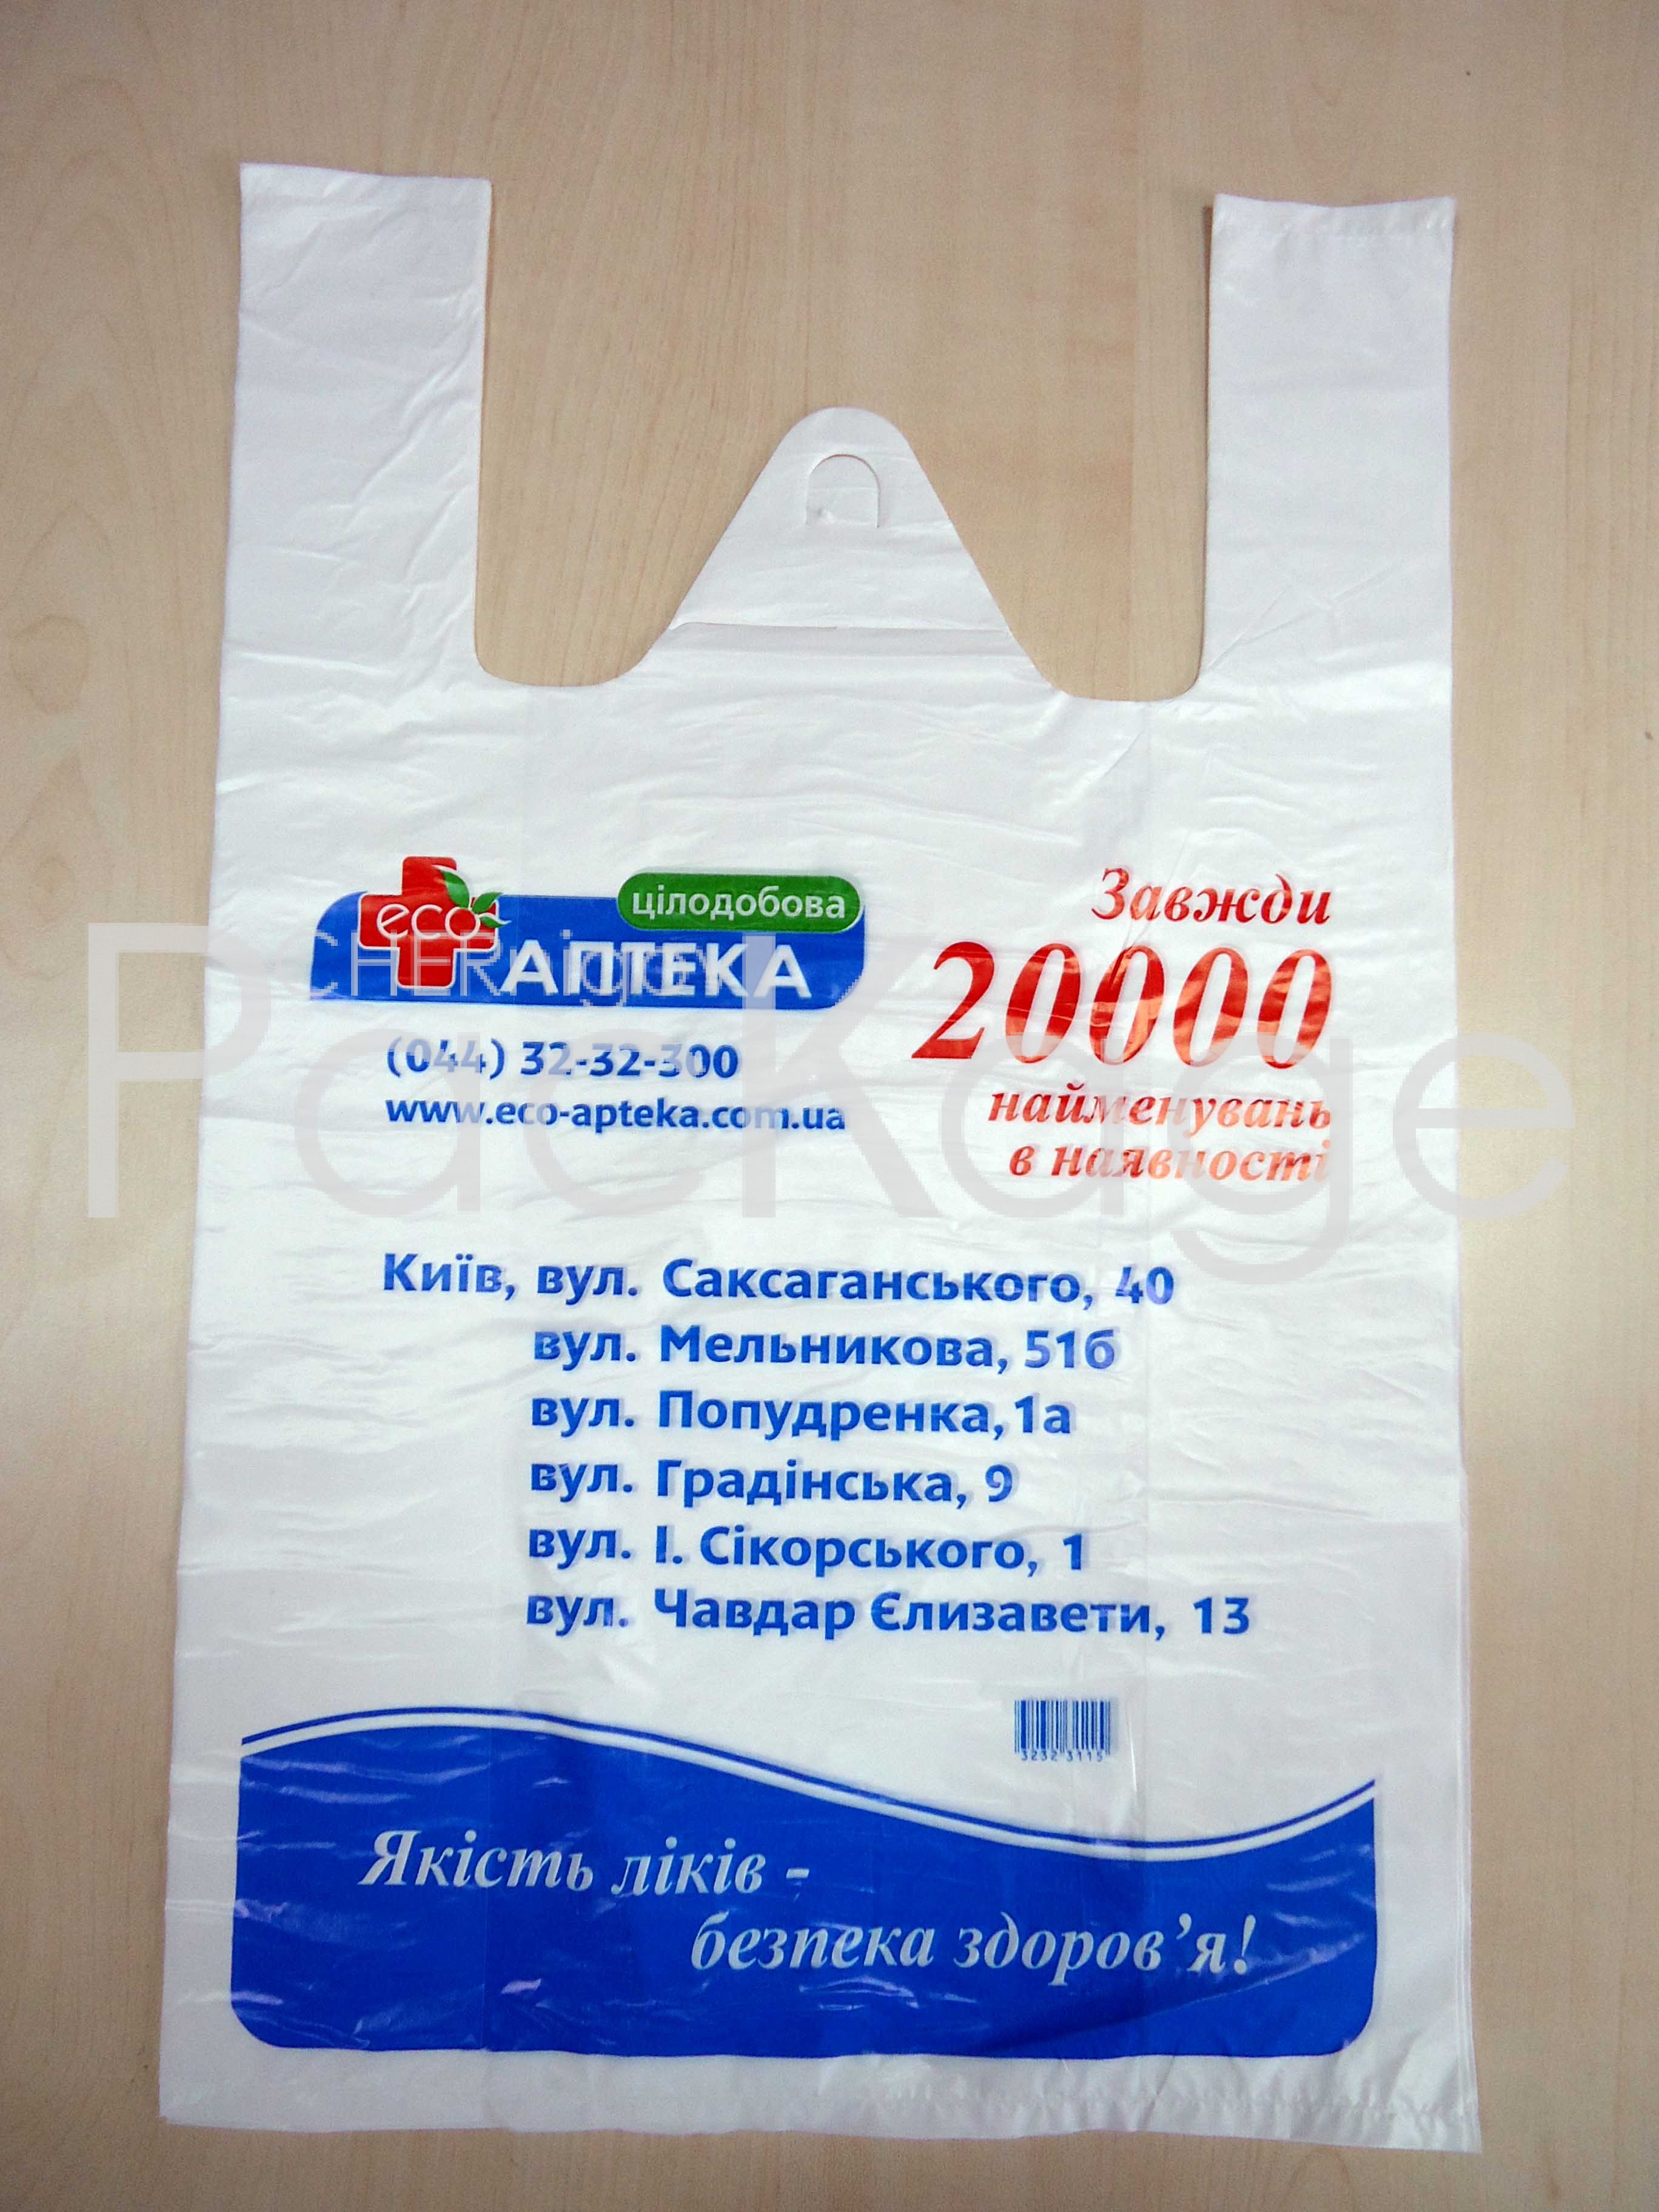 Флексопечать при производстве пакетов типа “майка” Chernigov Package - Photo DSC03562